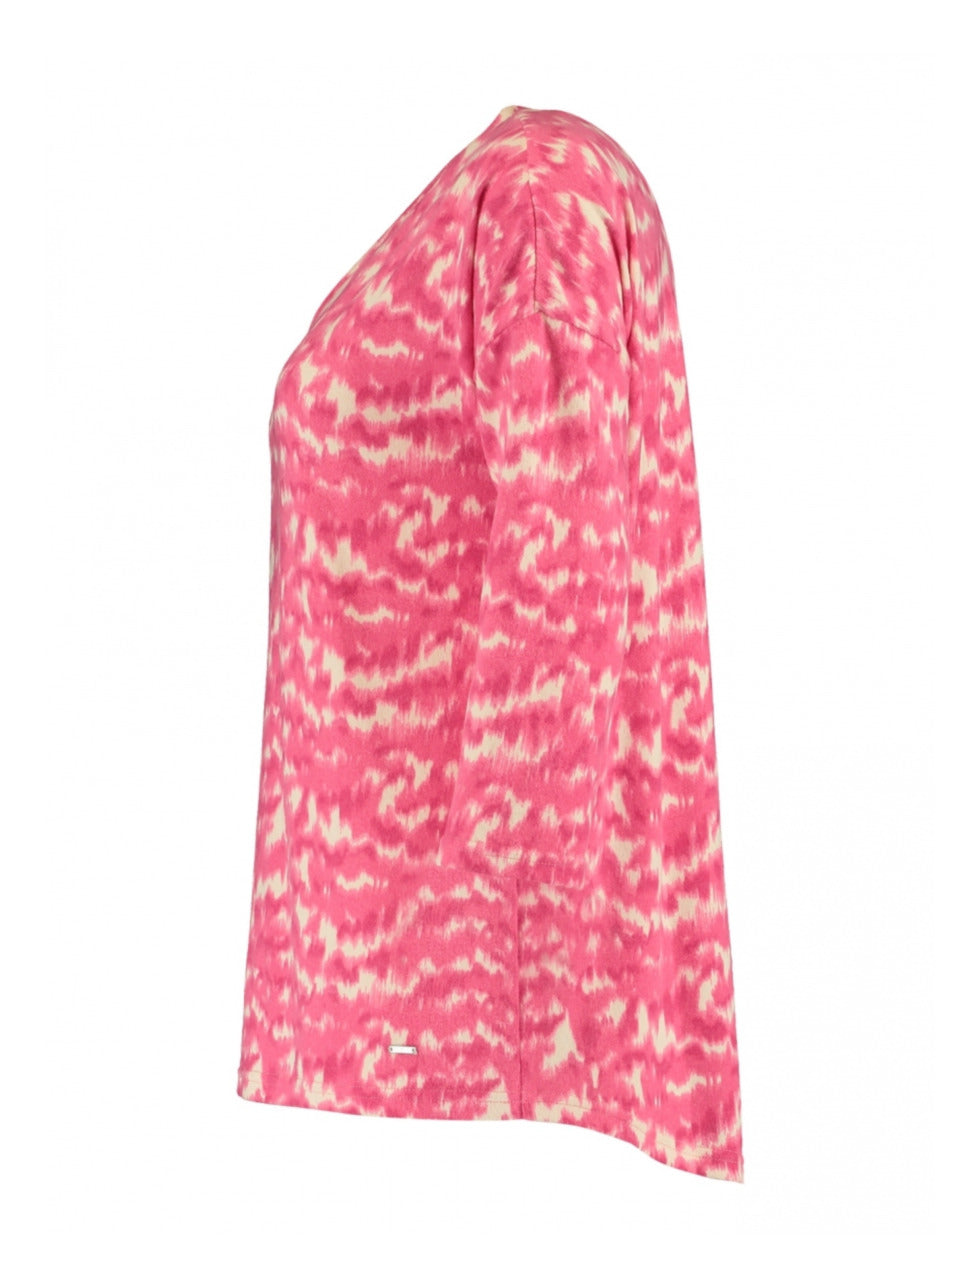 Malia Pink Diverse Knit Top